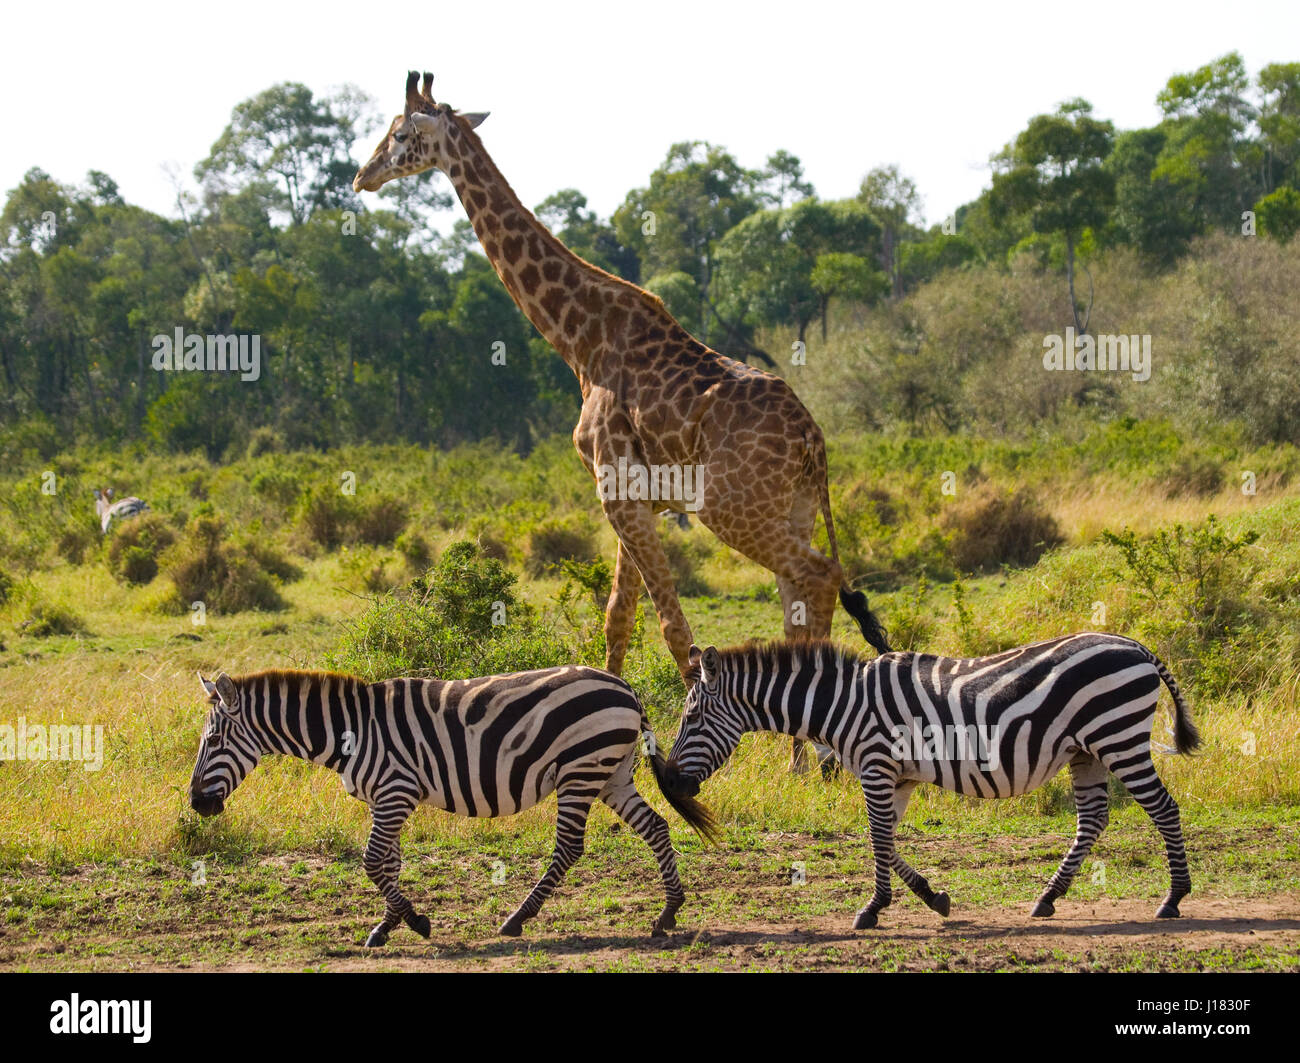 Giraffe in the savannah along with zebras. Kenya. Tanzania. East Africa. Stock Photo